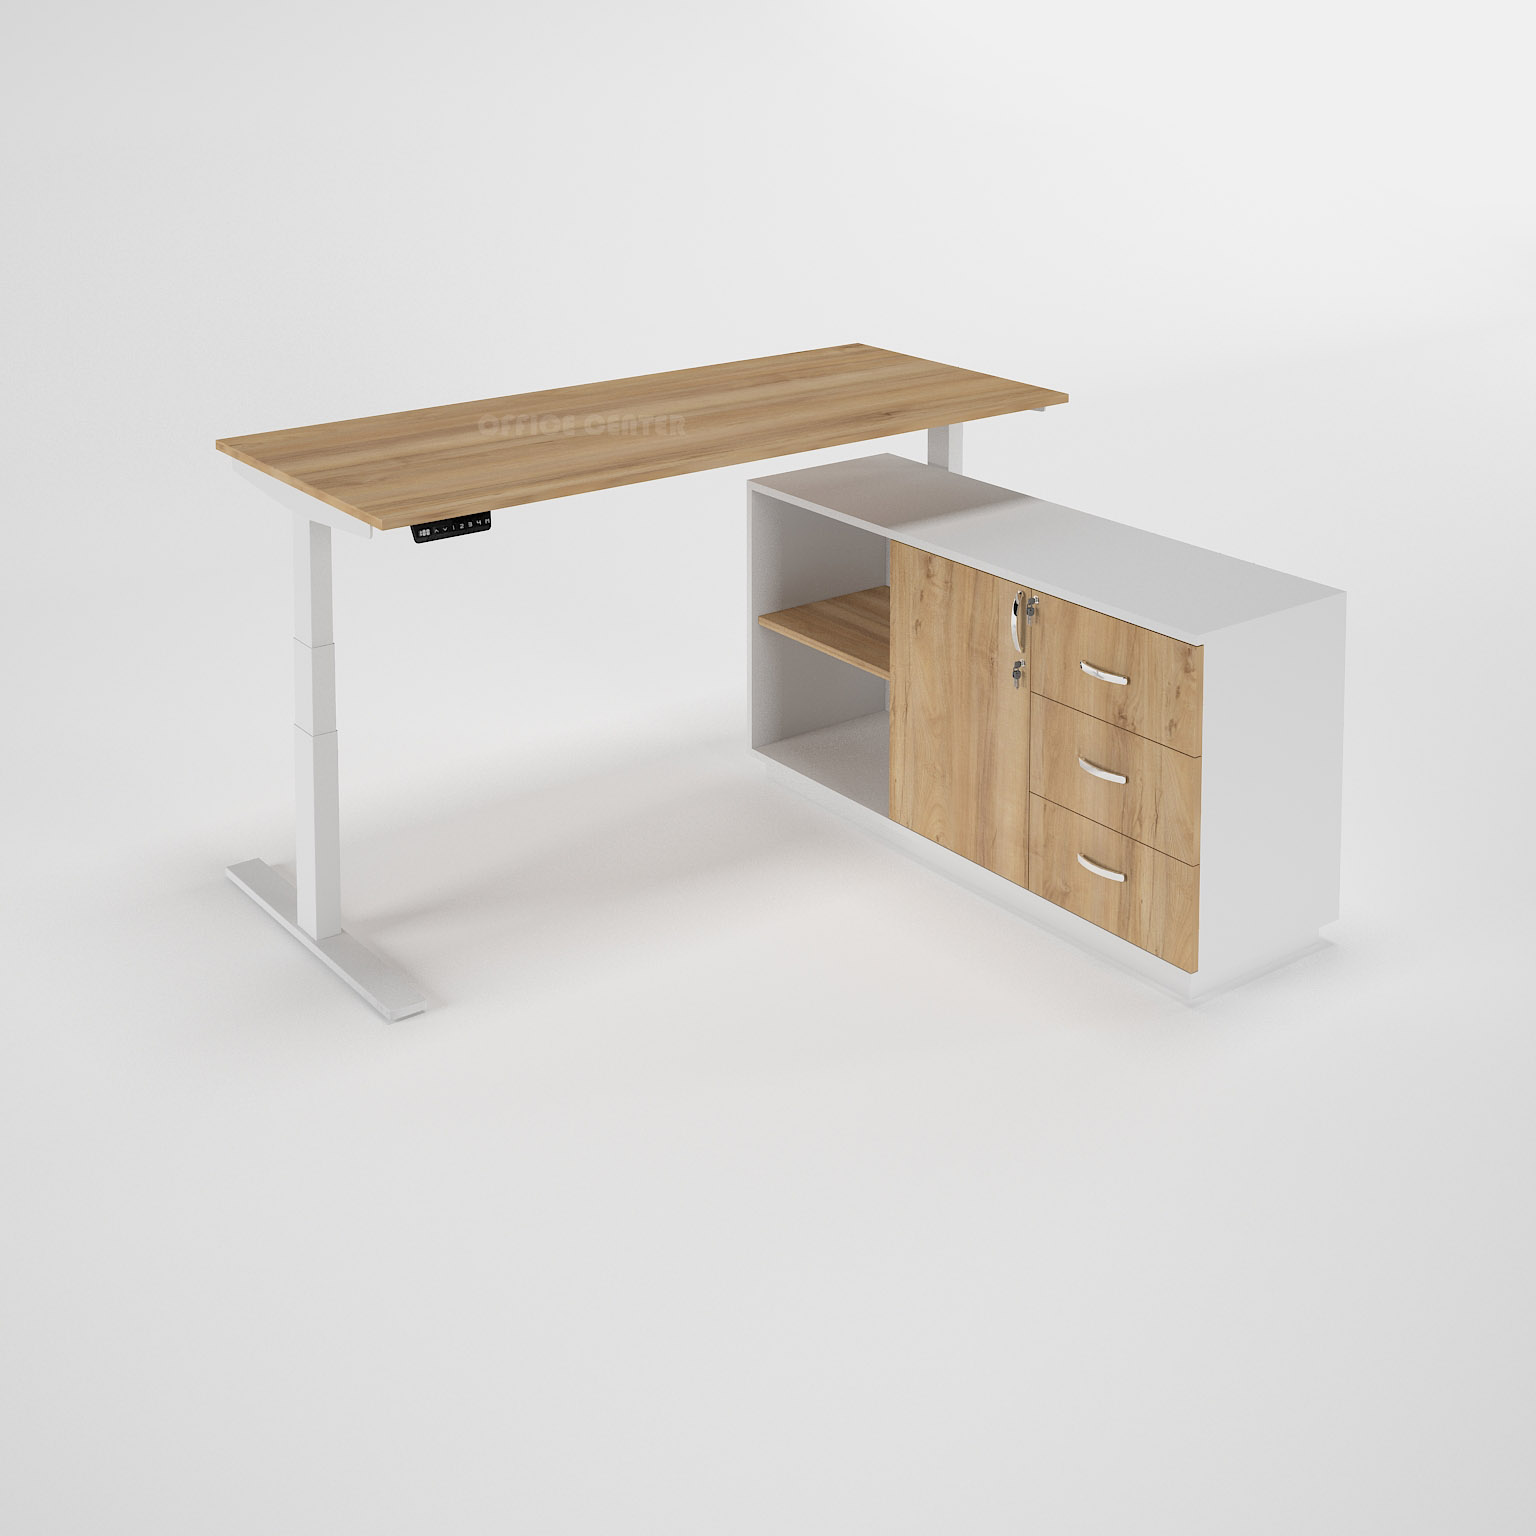 Alex S3 Height adjustable desk